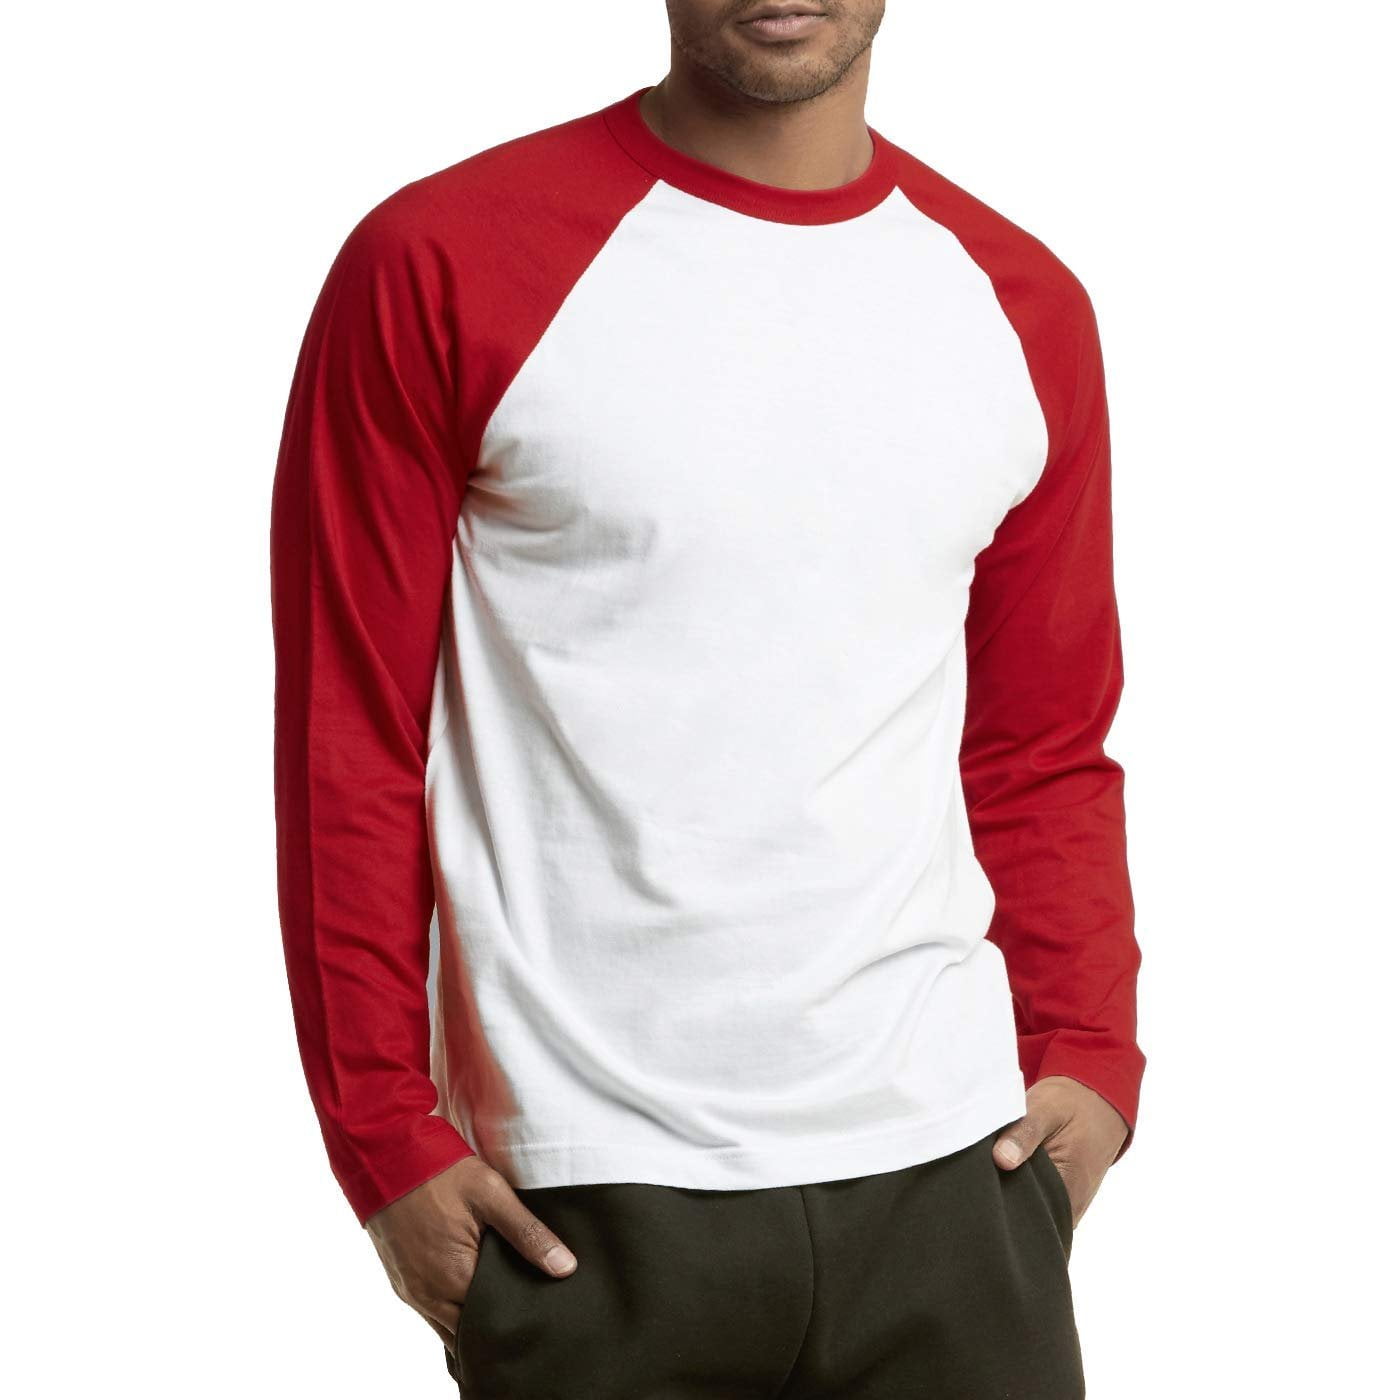 red white t shirt